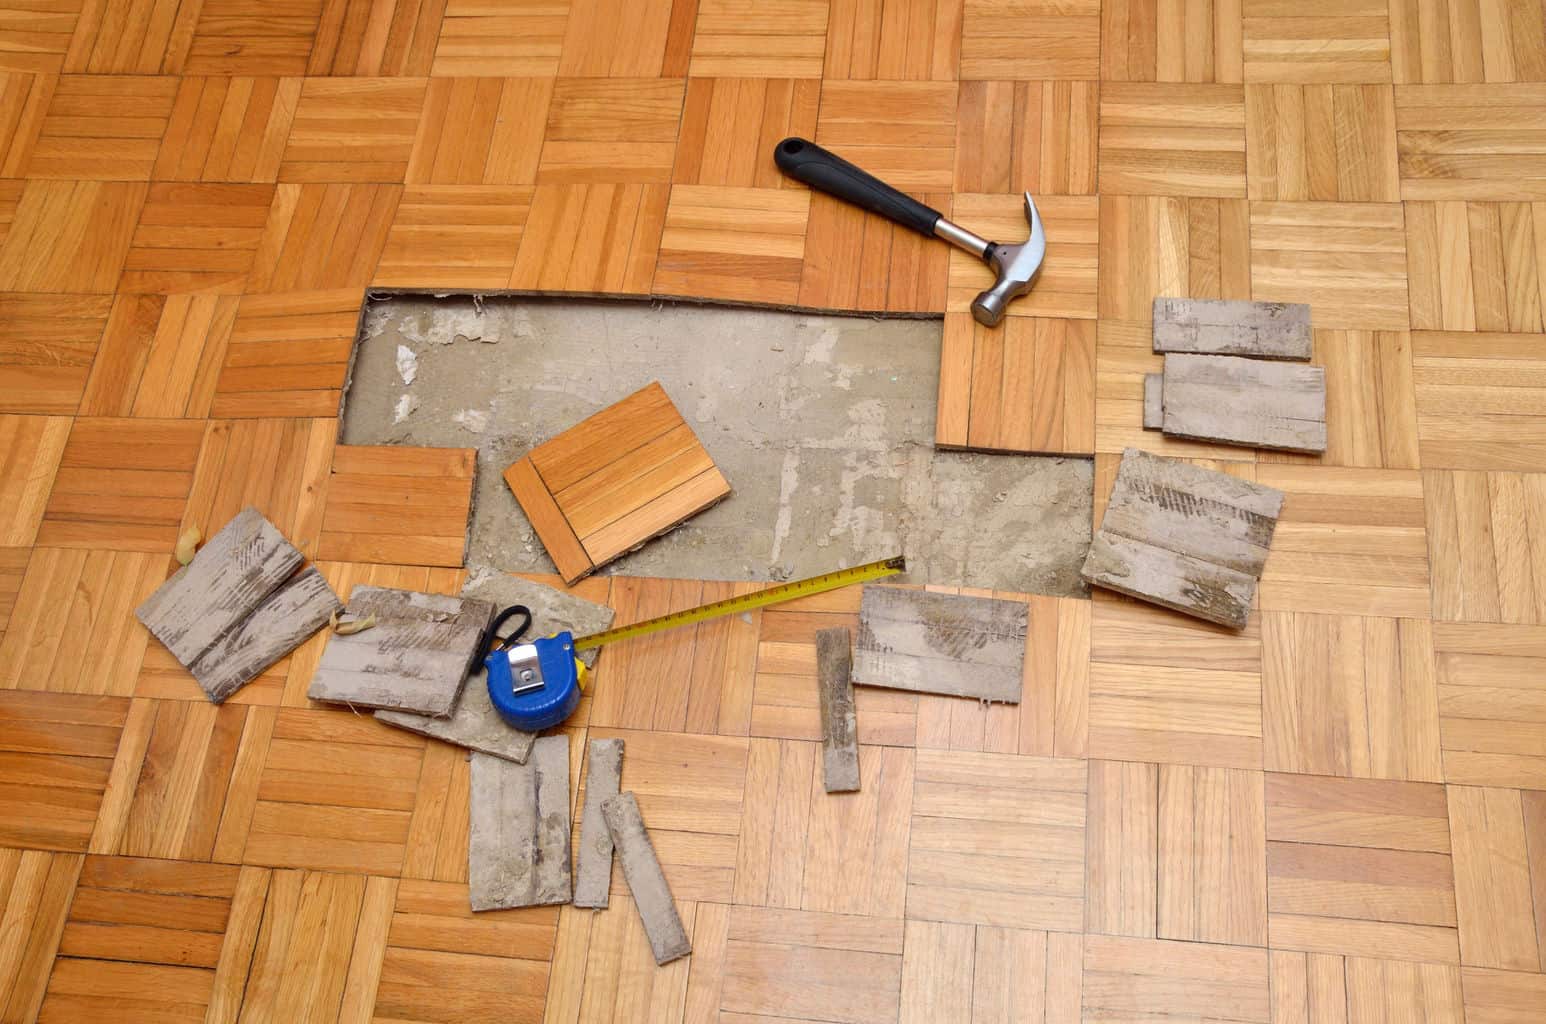 damaged wooden floor